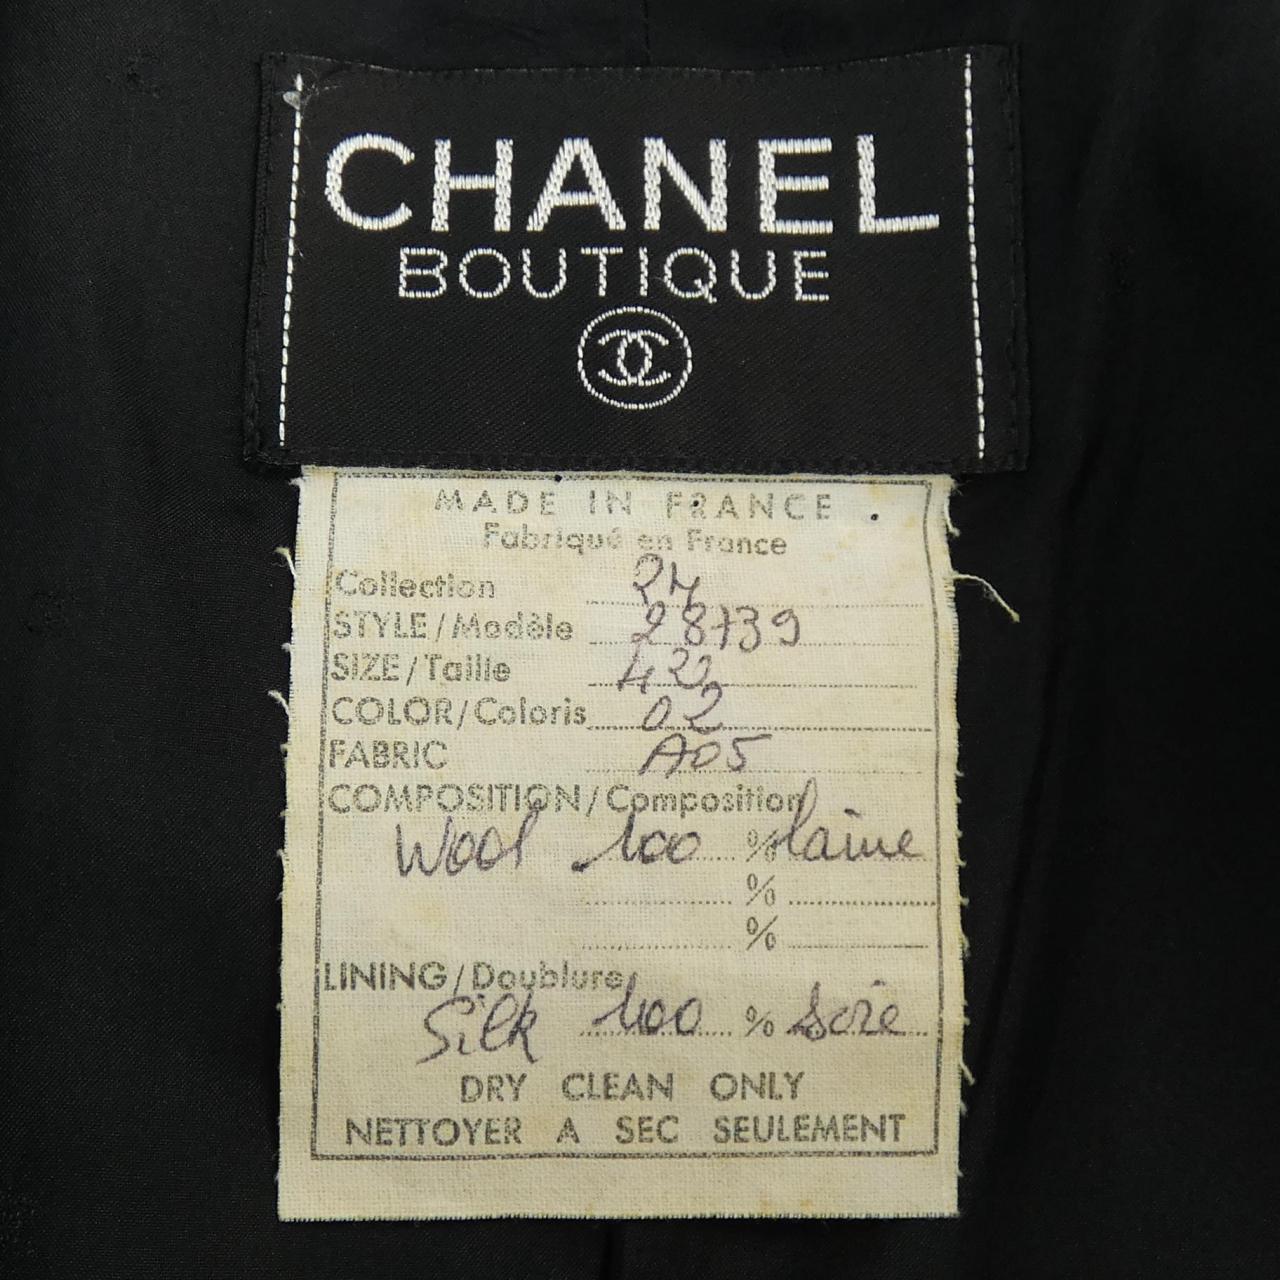 [vintage] CHANEL夾克